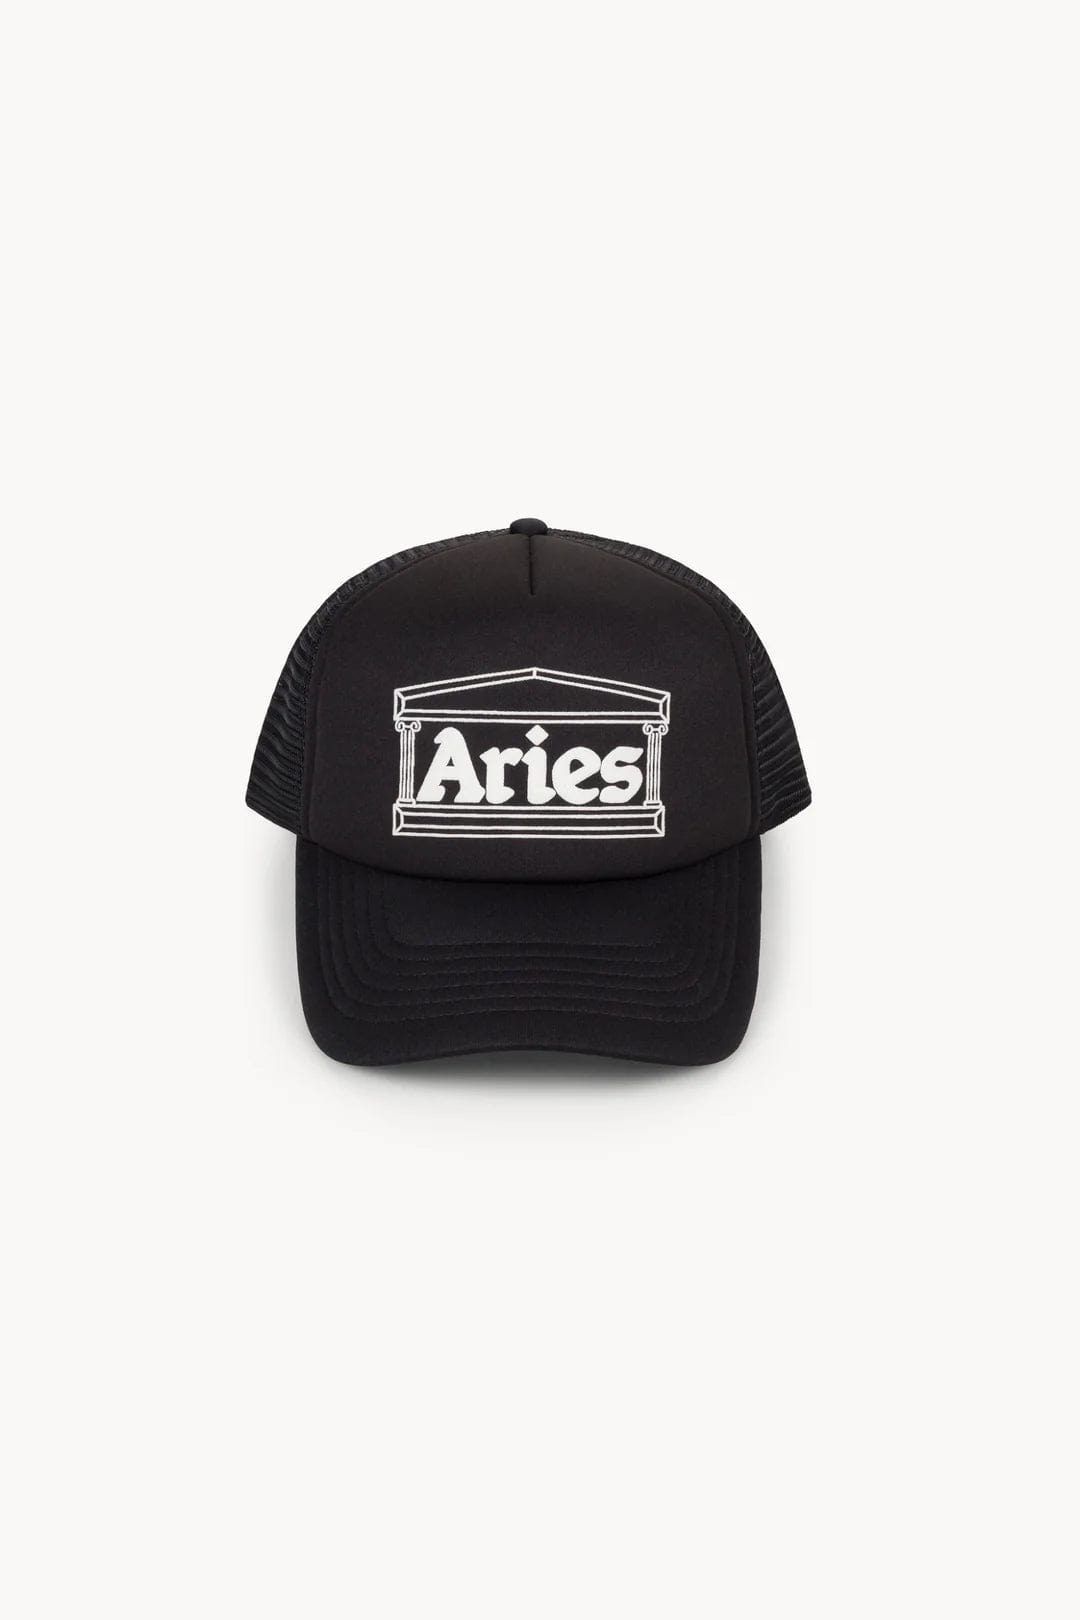 Aries Temple Trucker Cap